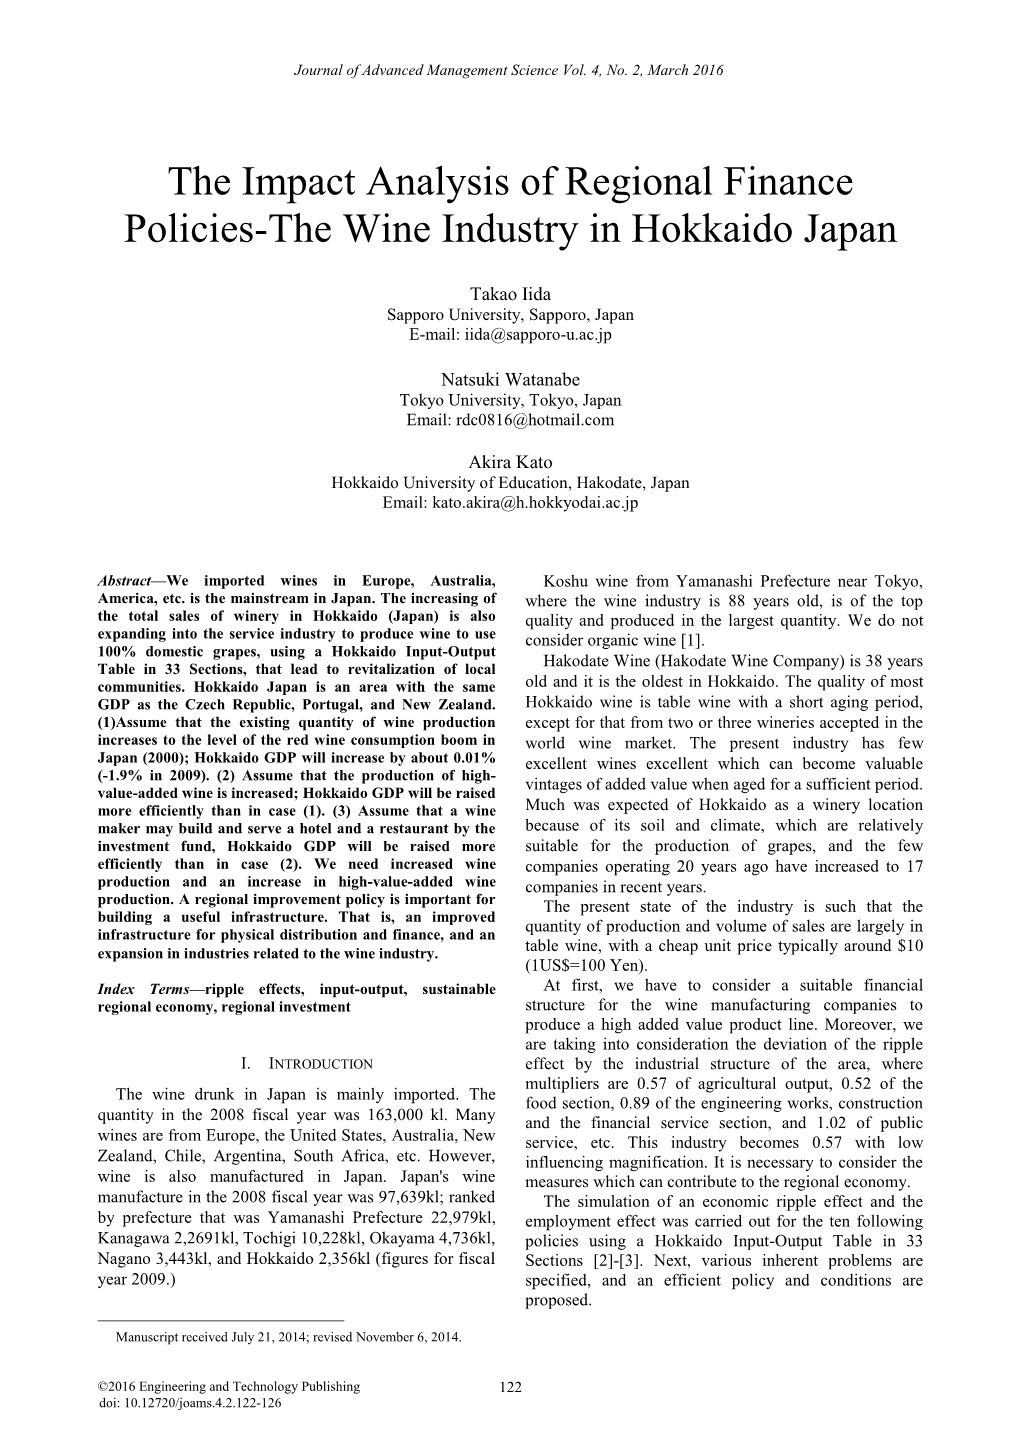 The Impact Analysis of Regional Finance Policies-The Wine Industry in Hokkaido Japan